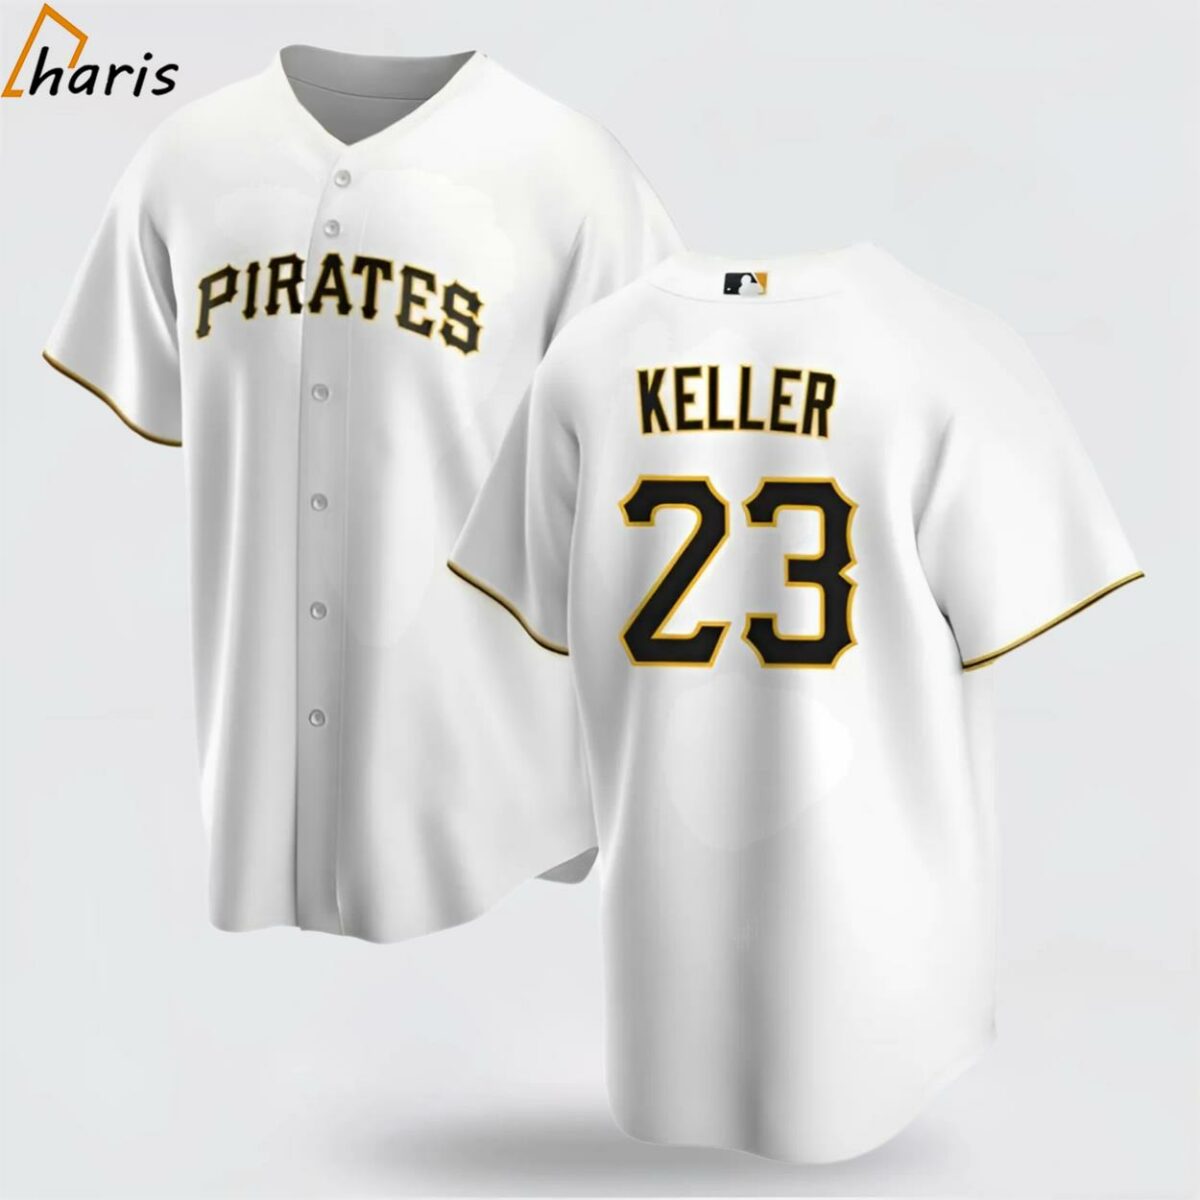 Mitch Keller 23 Pittsburgh 3D Printed Baseball Jersey 1 jersey